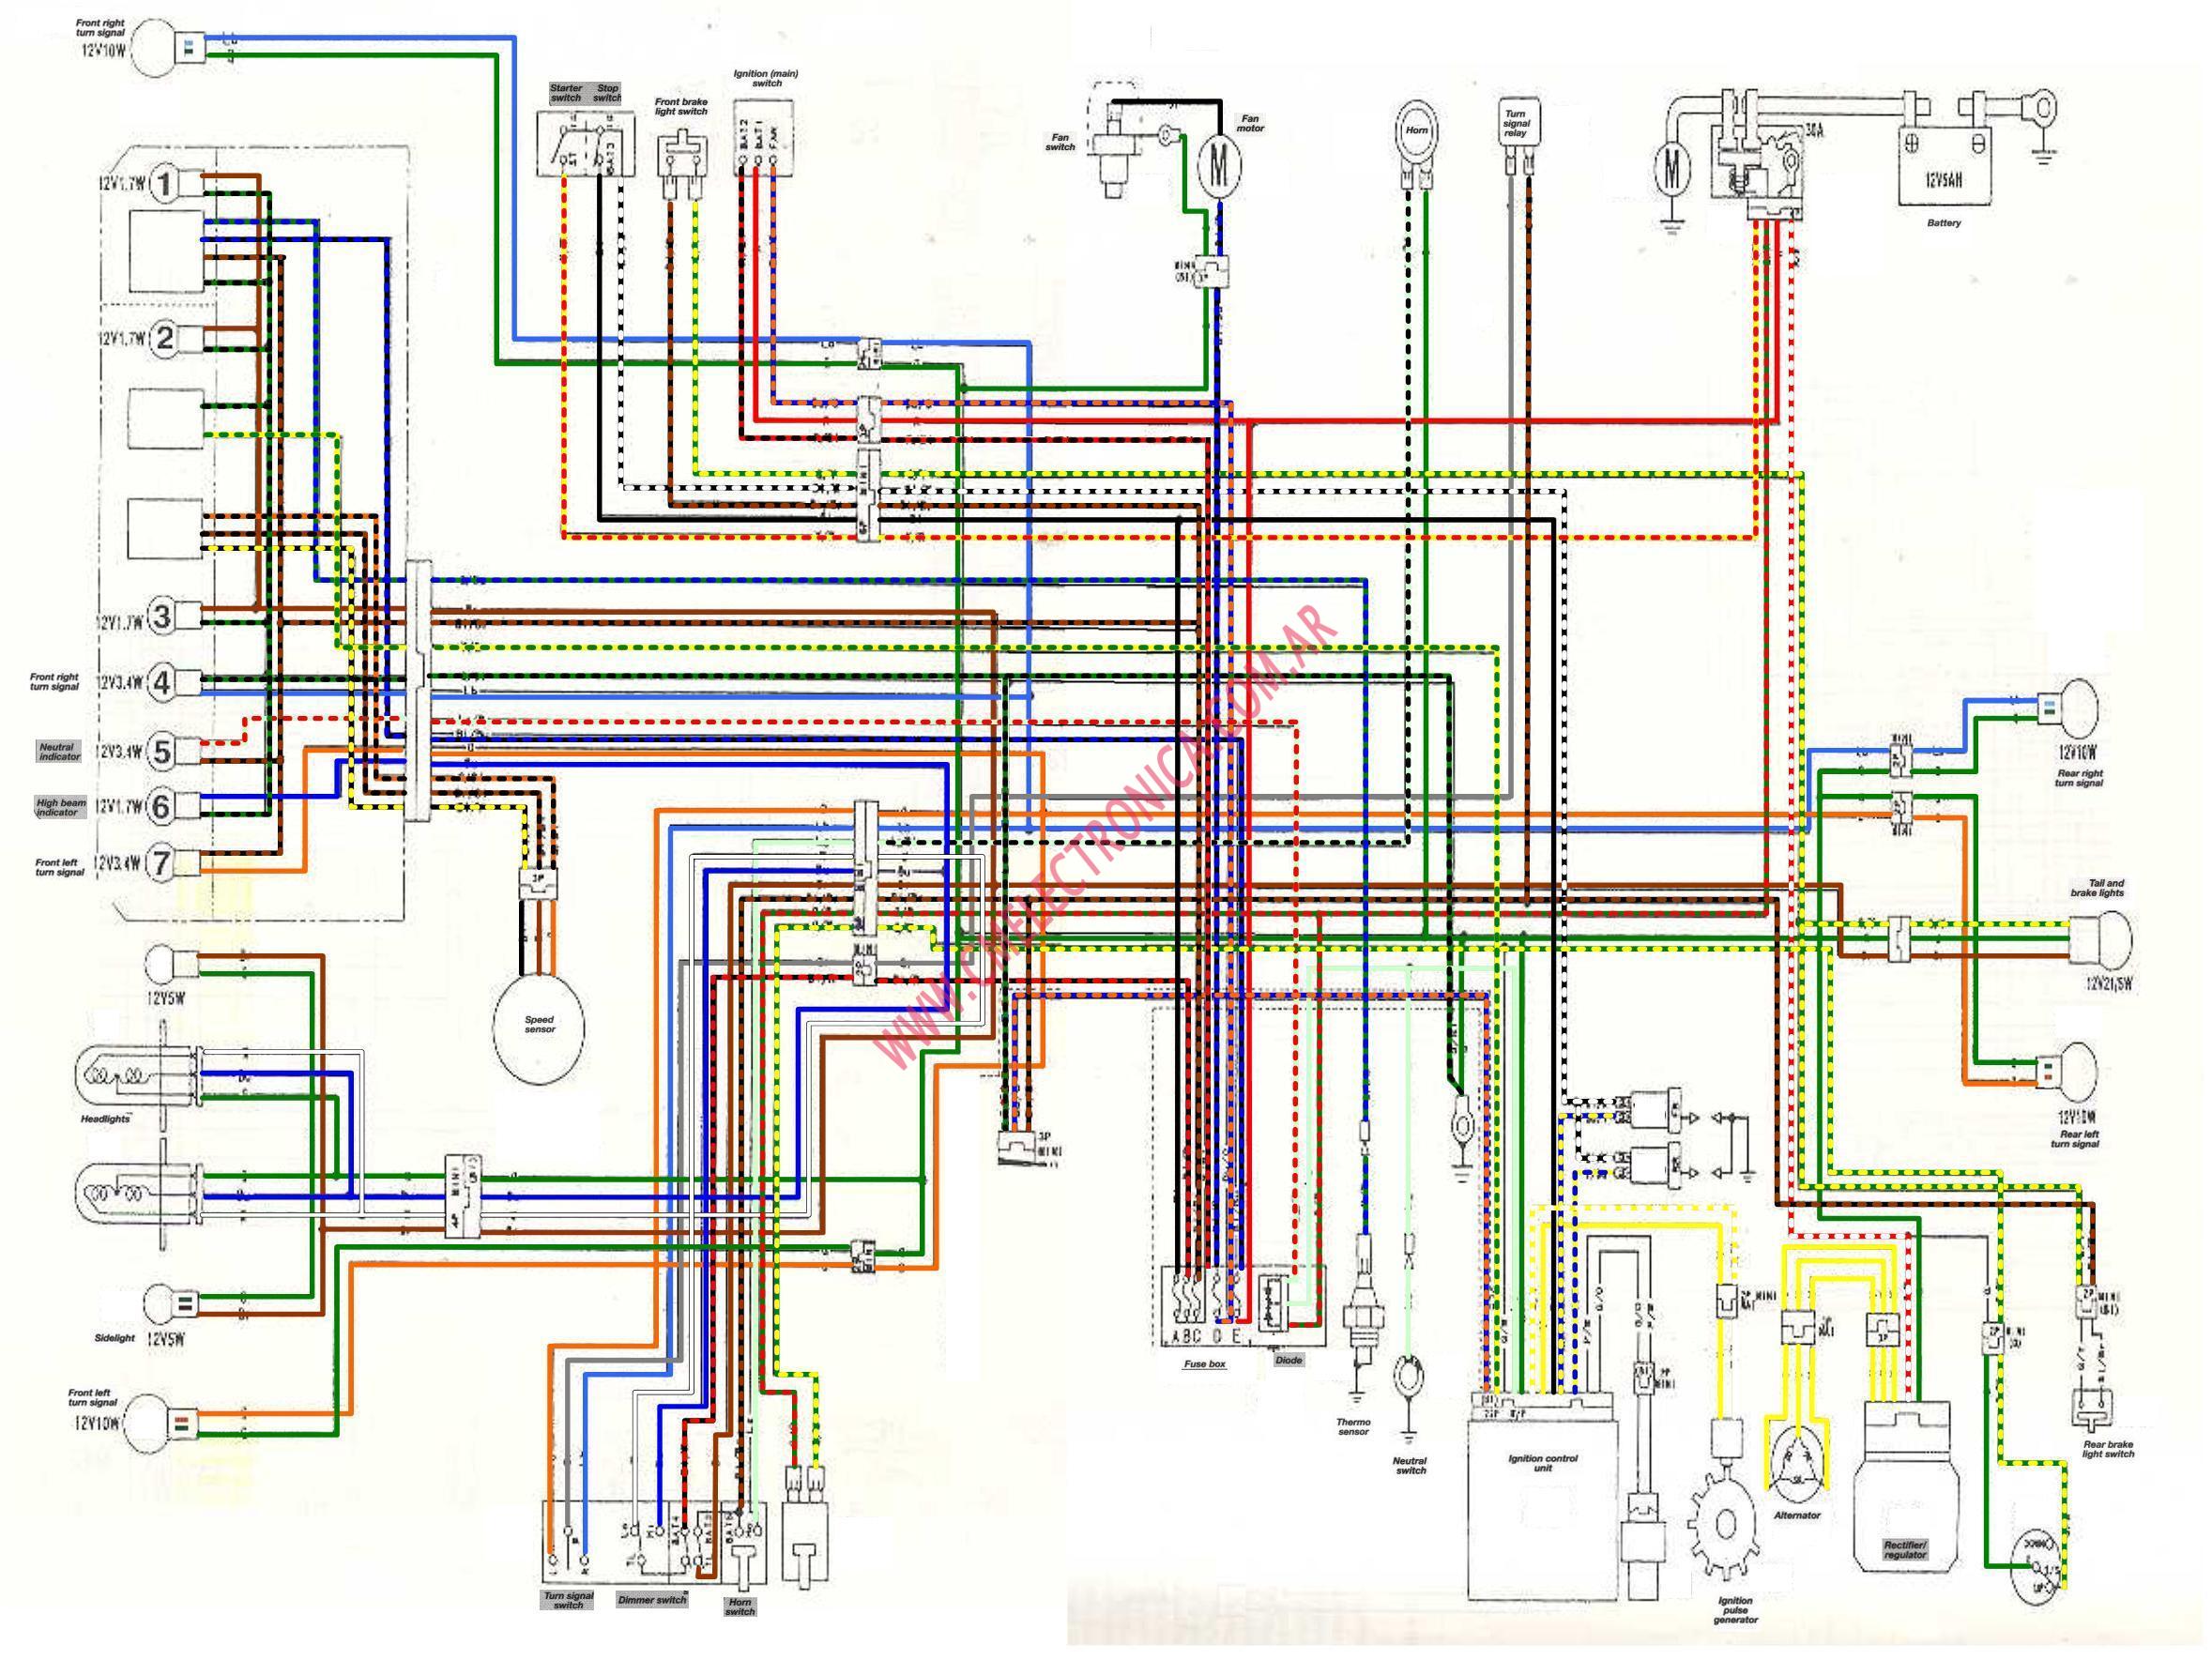 Diagram Honda Xr 125 L Wiring Diagram Full Version Hd Quality Wiring Diagram Adiagrams Beatricemonroy It